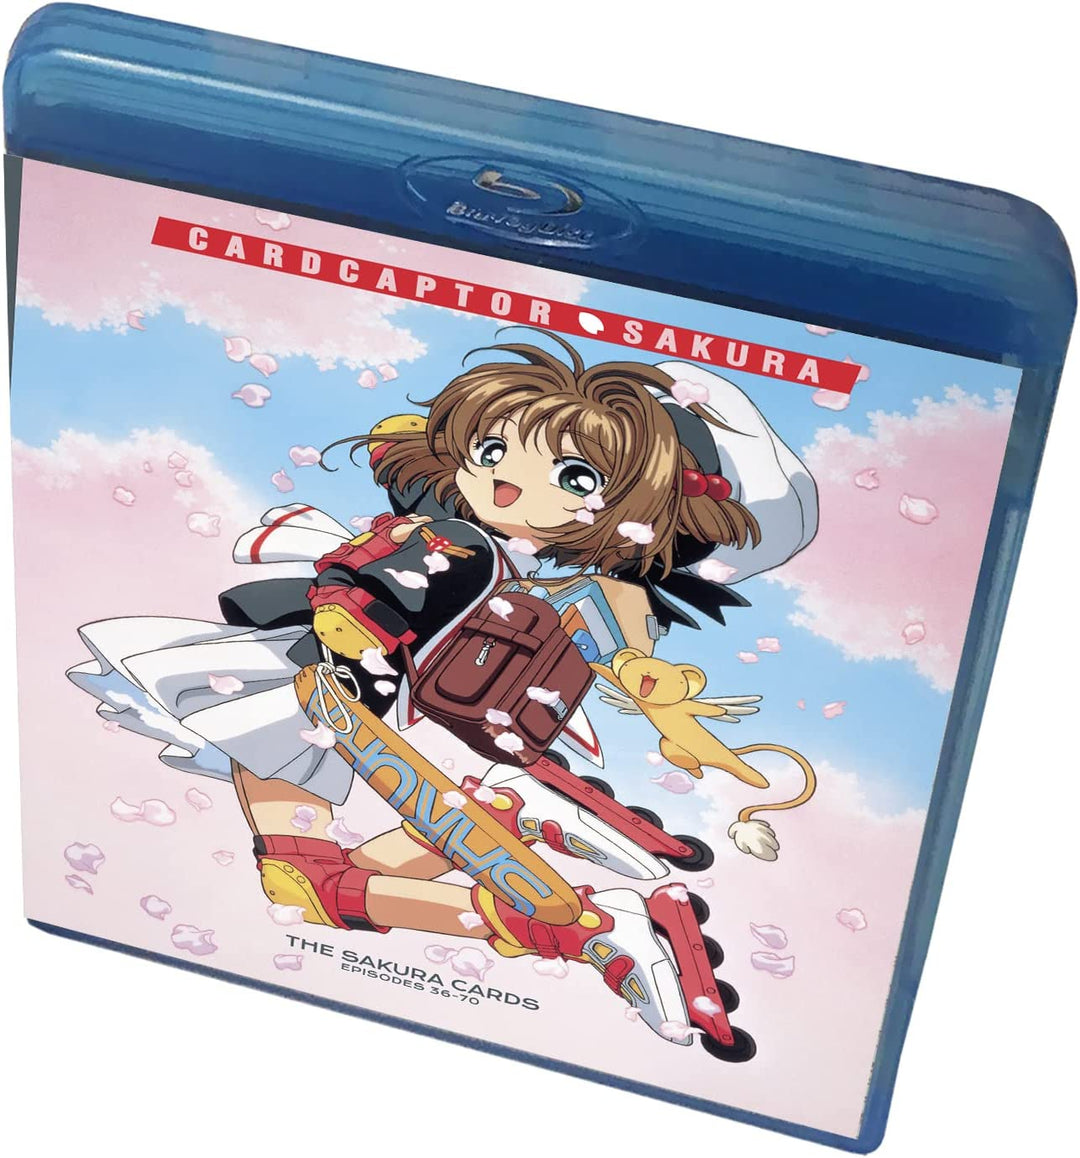 Card Captor Sakura TV-Serie (Collector's Limited Edition) [Blu-ray]